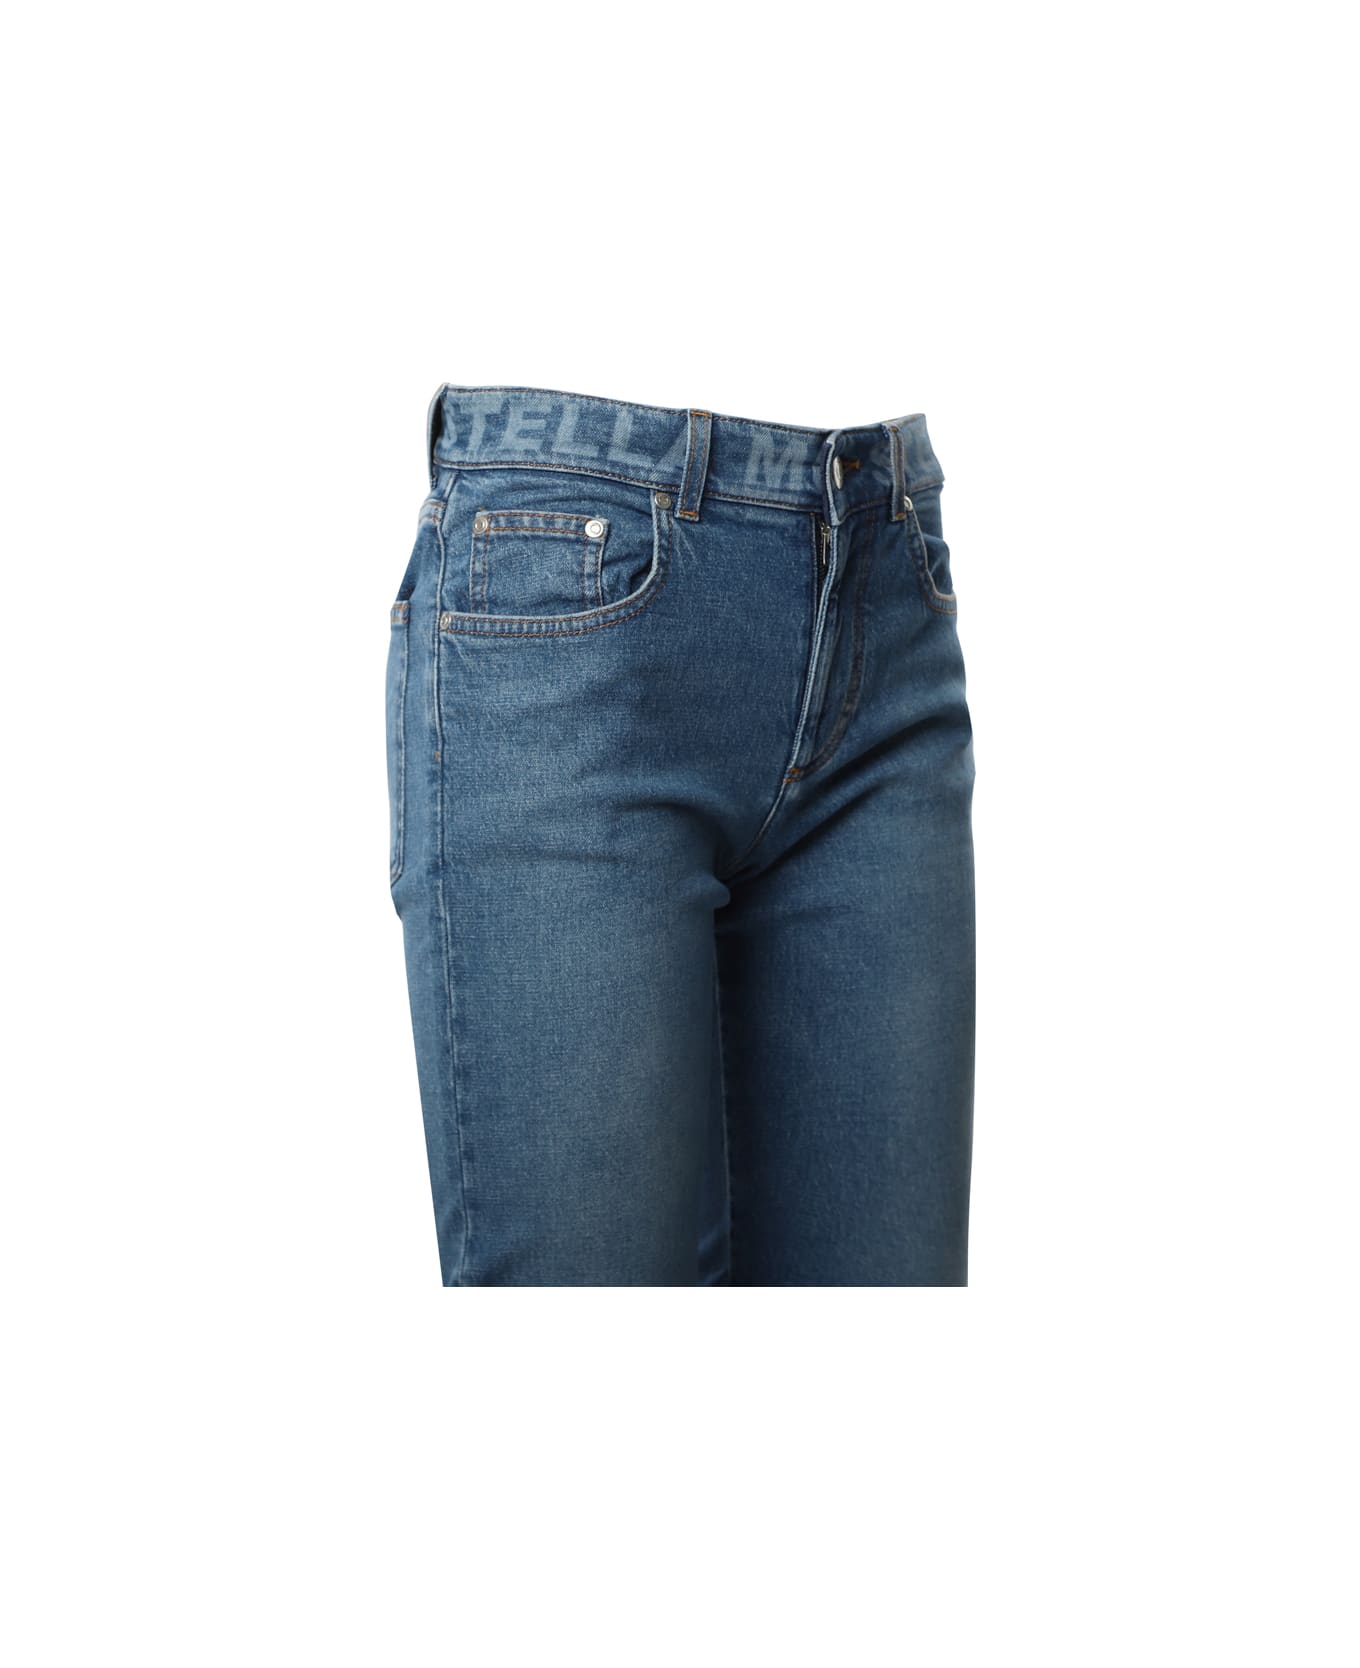 Stella McCartney Flared Jeans In Cotton - Medium blue デニム